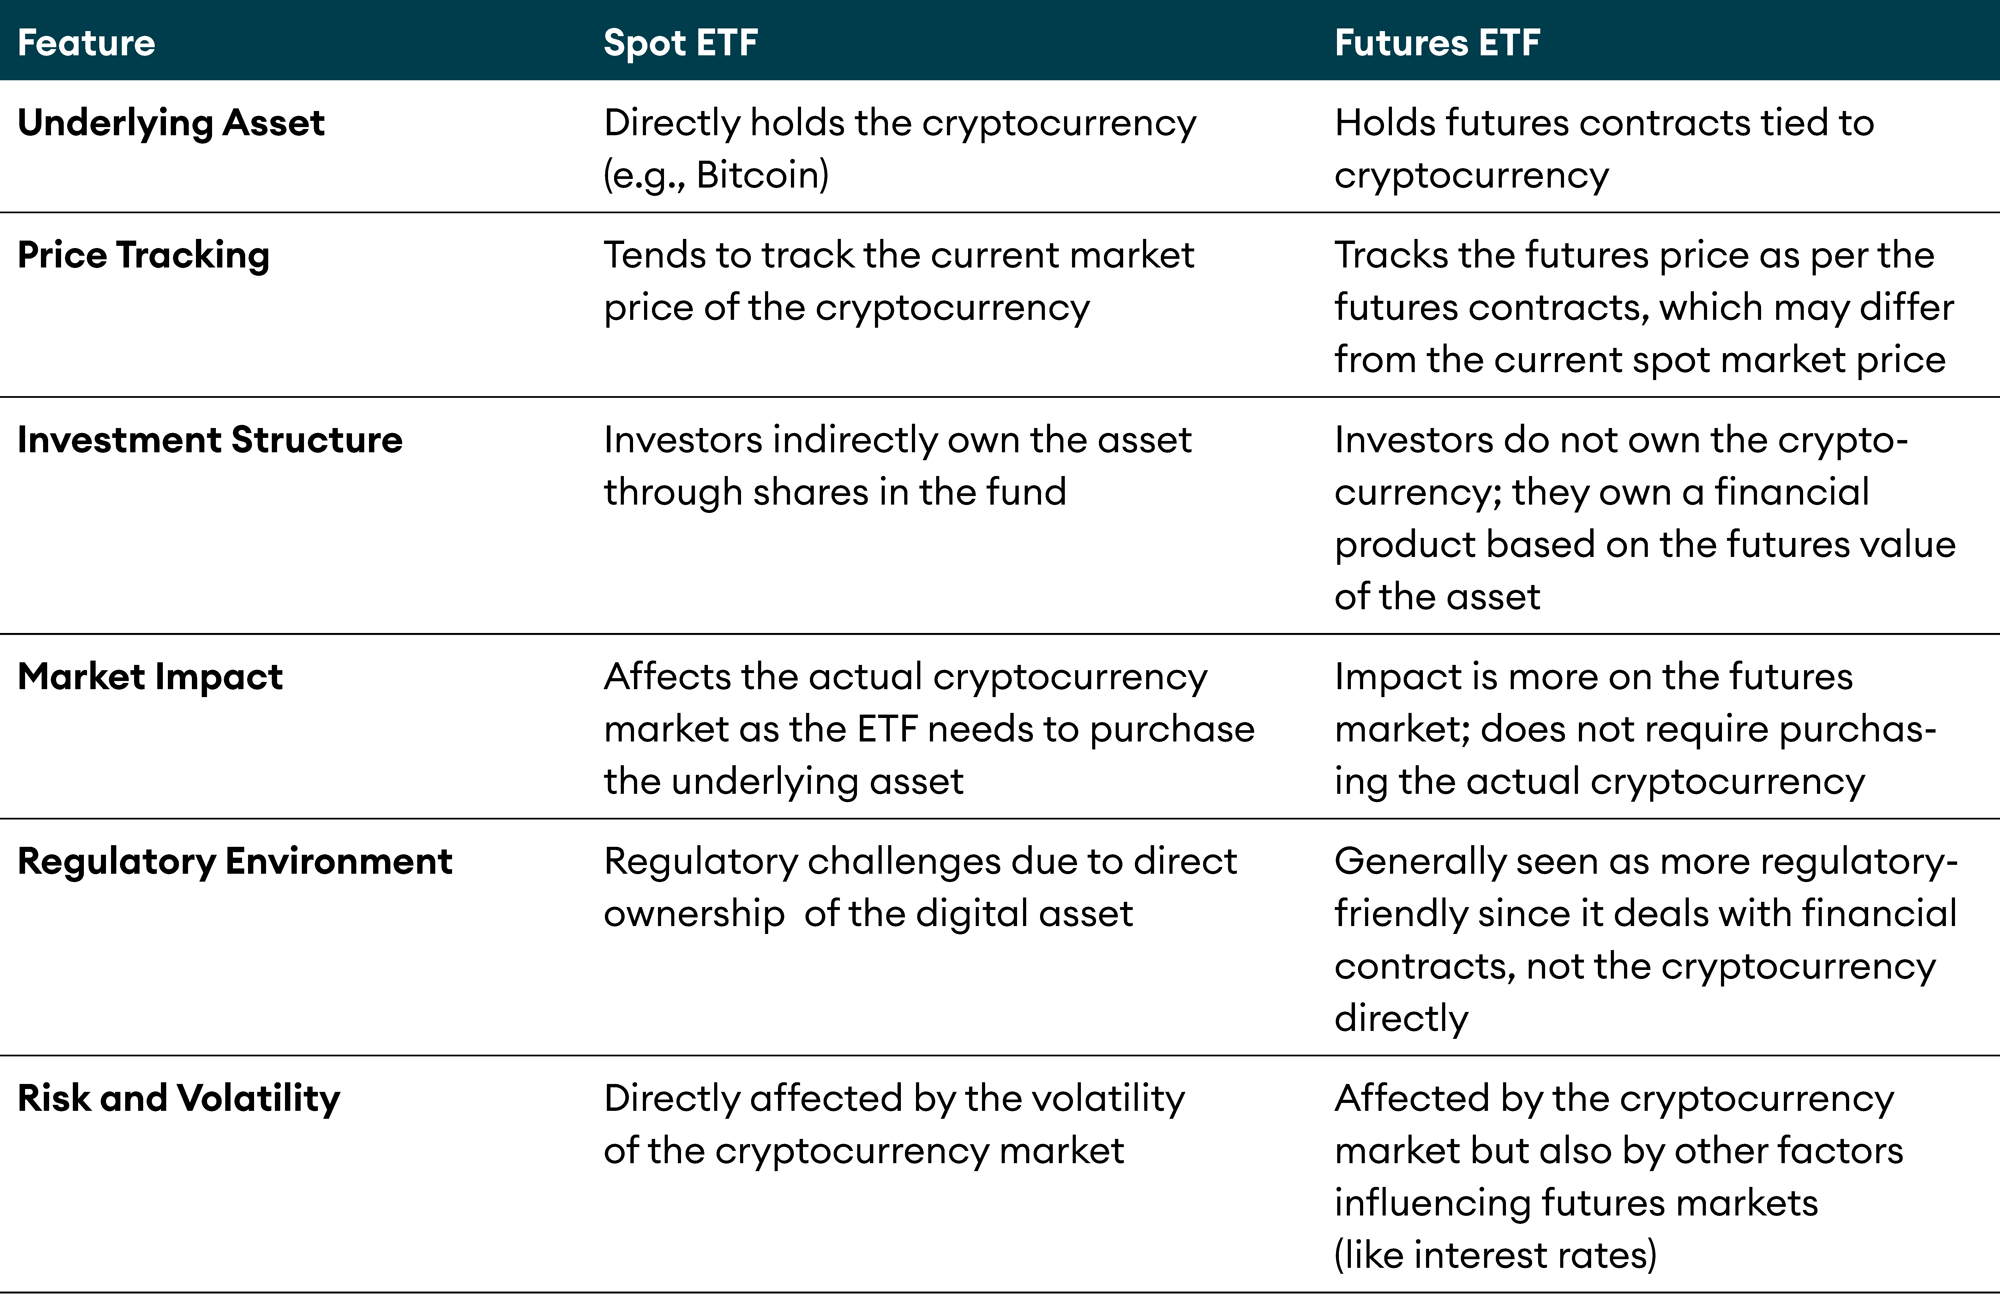 Spot ETF vs Futures ETF